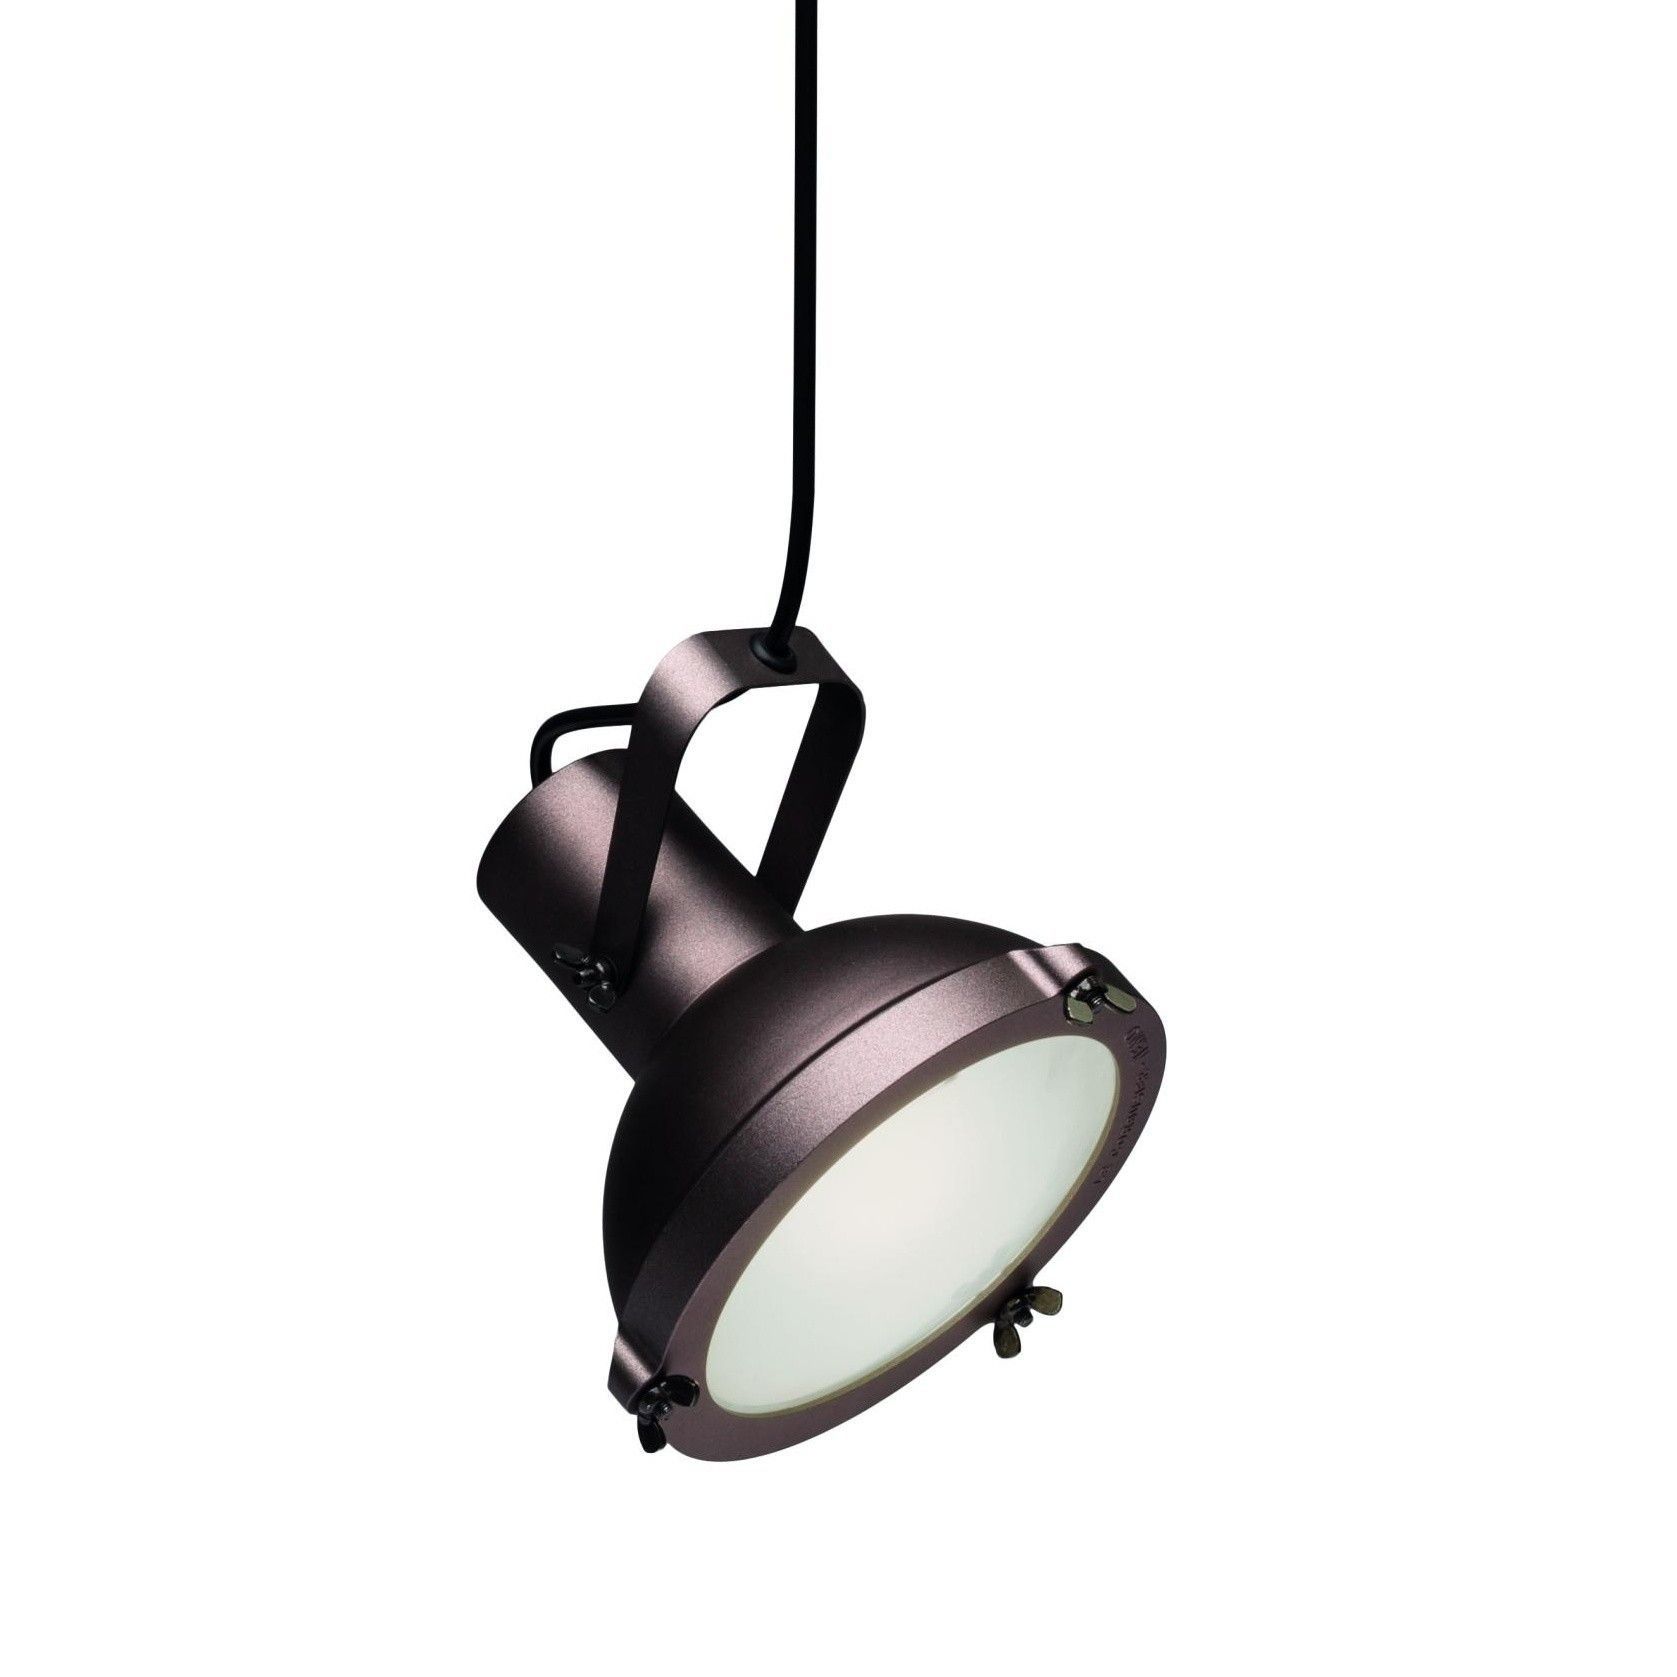 PROJECTEUR 165 pendant lamp by NEMO lighting